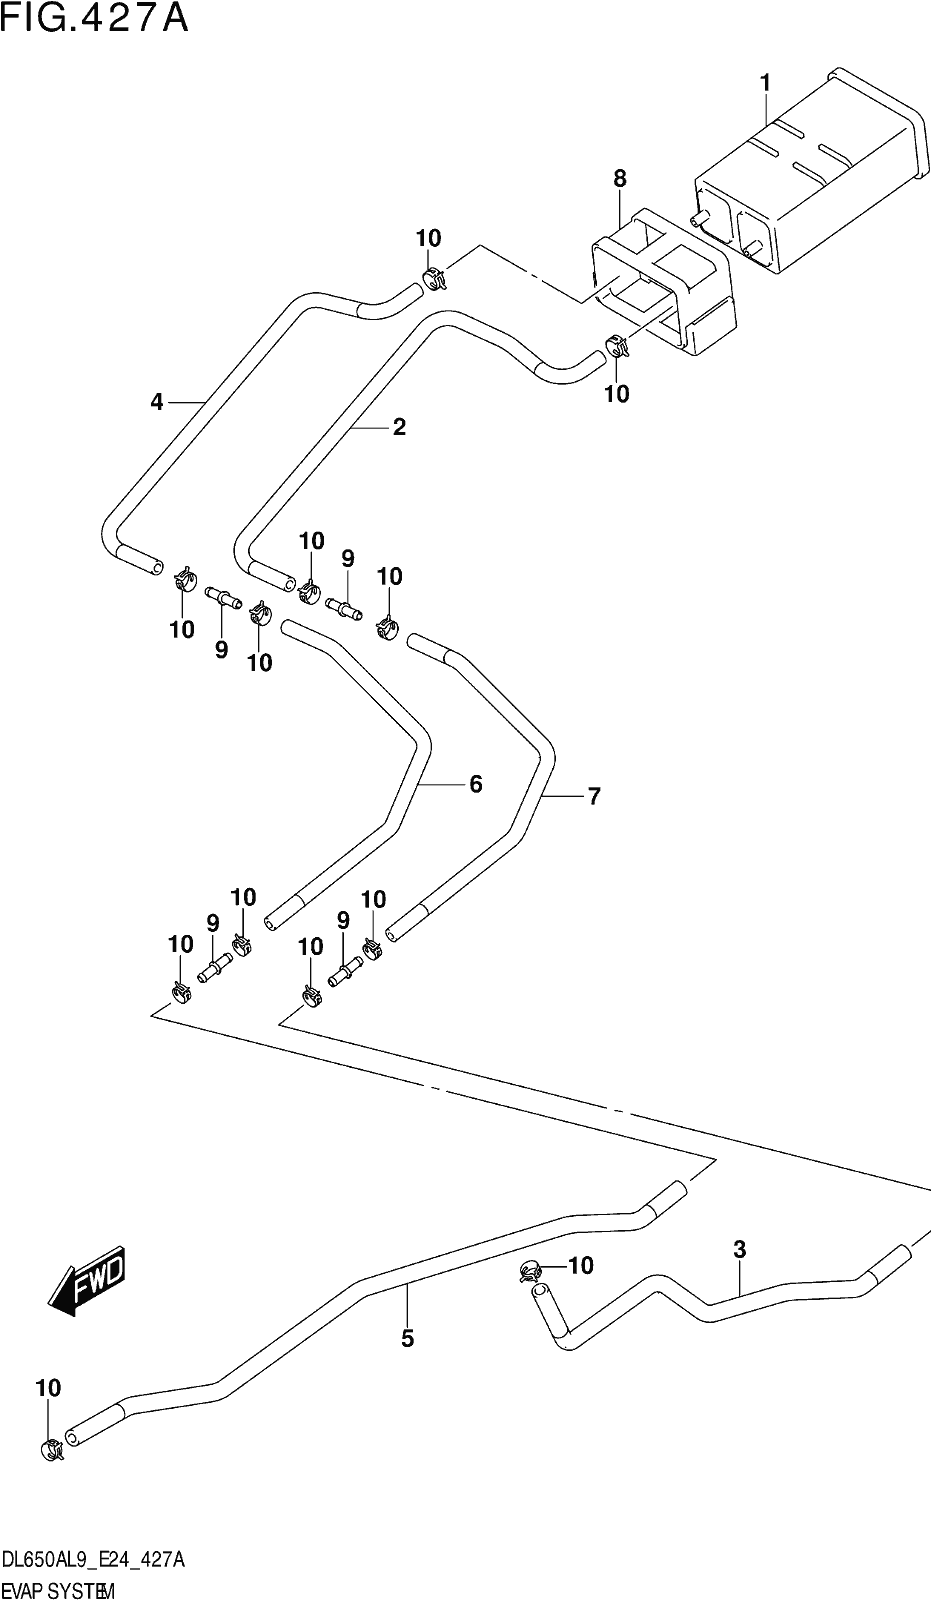 Fig.427a Evap System